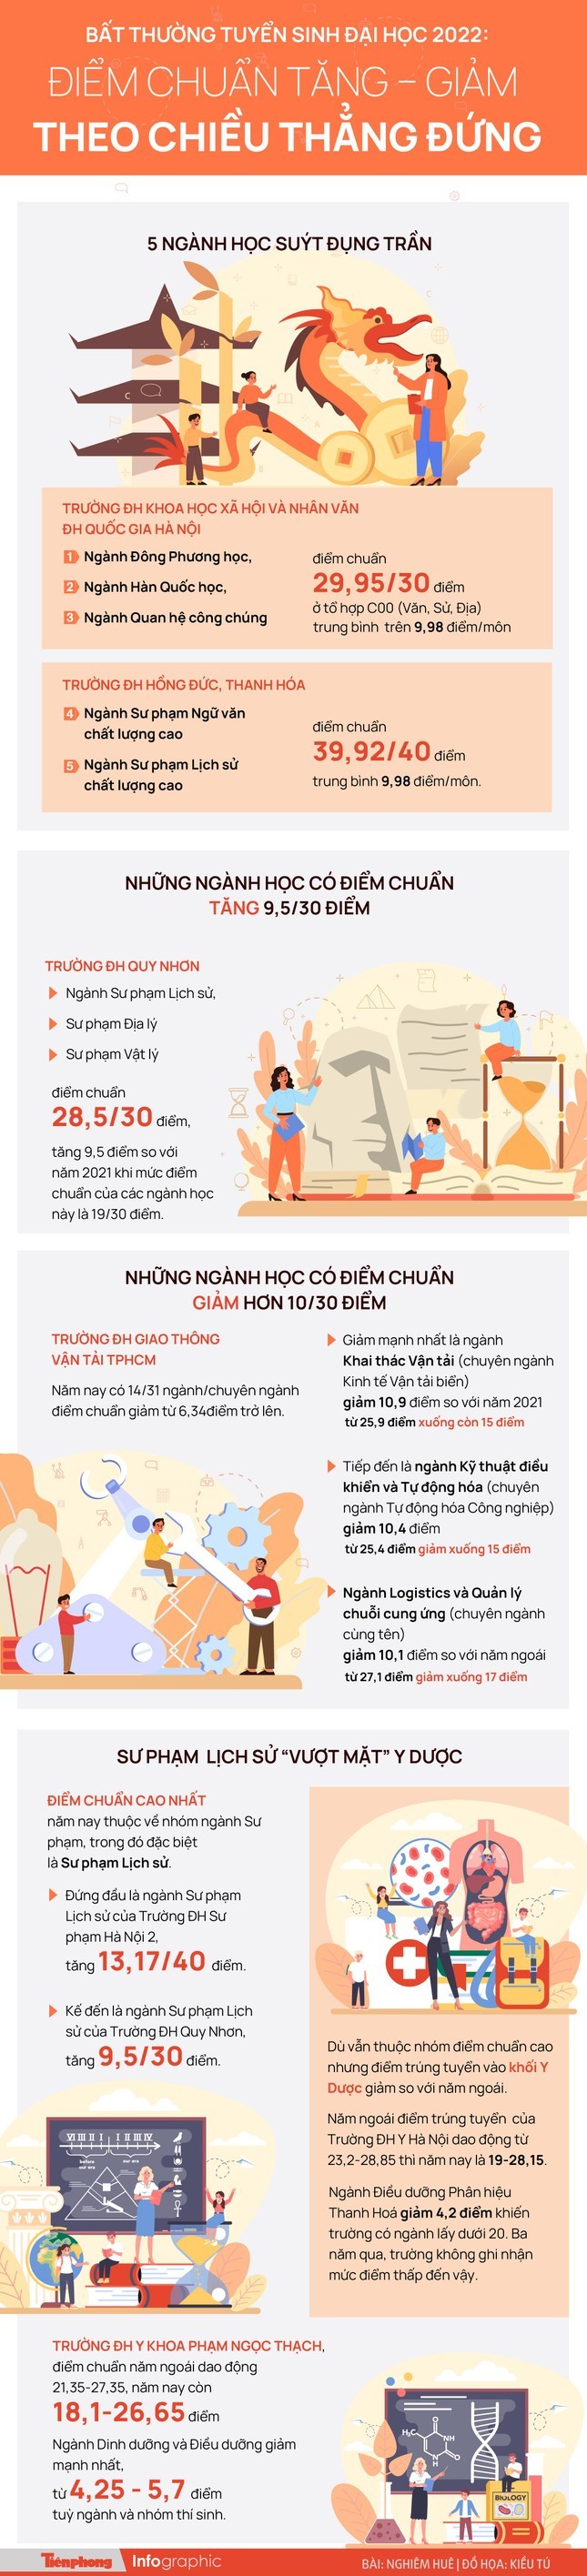 Tuyen sinh dai hoc 2022: Thu tuc lam kho thi sinh?-Hinh-2